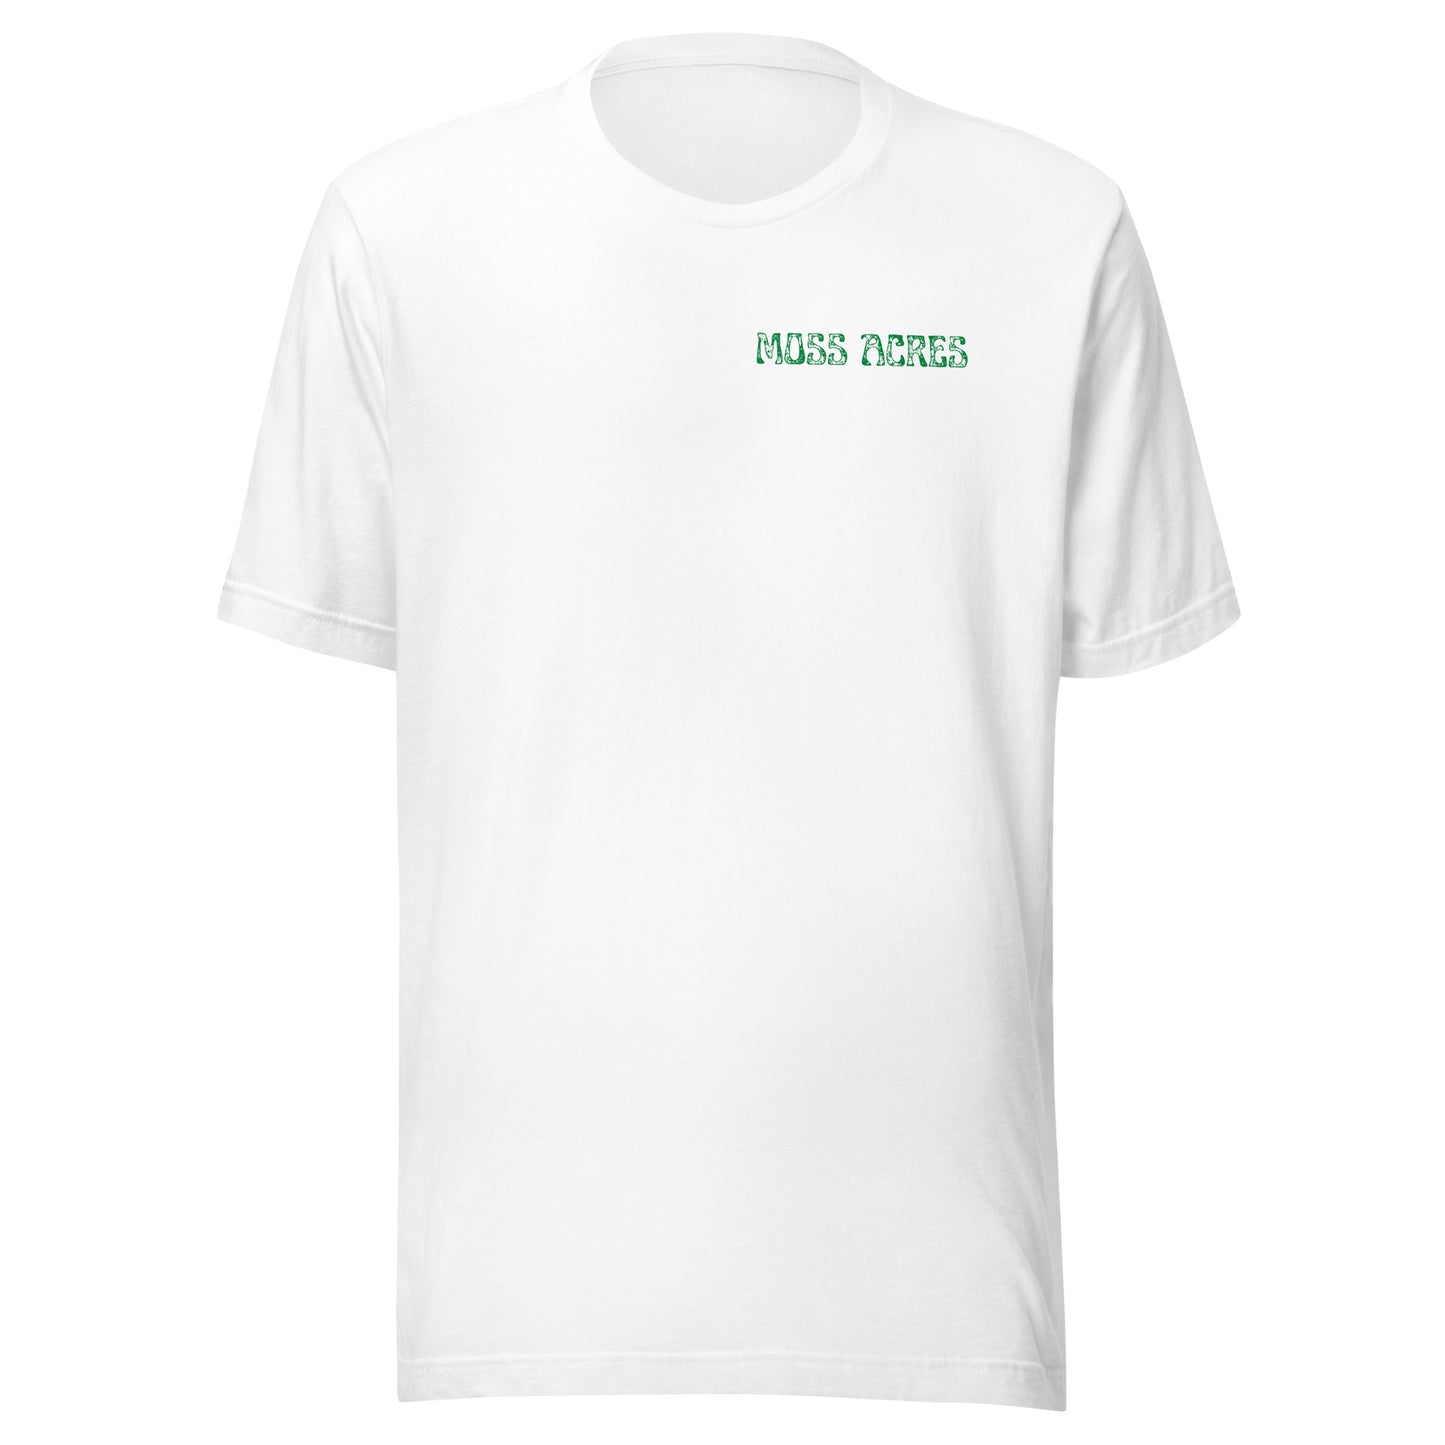 Moss Acres Swag - Unisex t-shirt